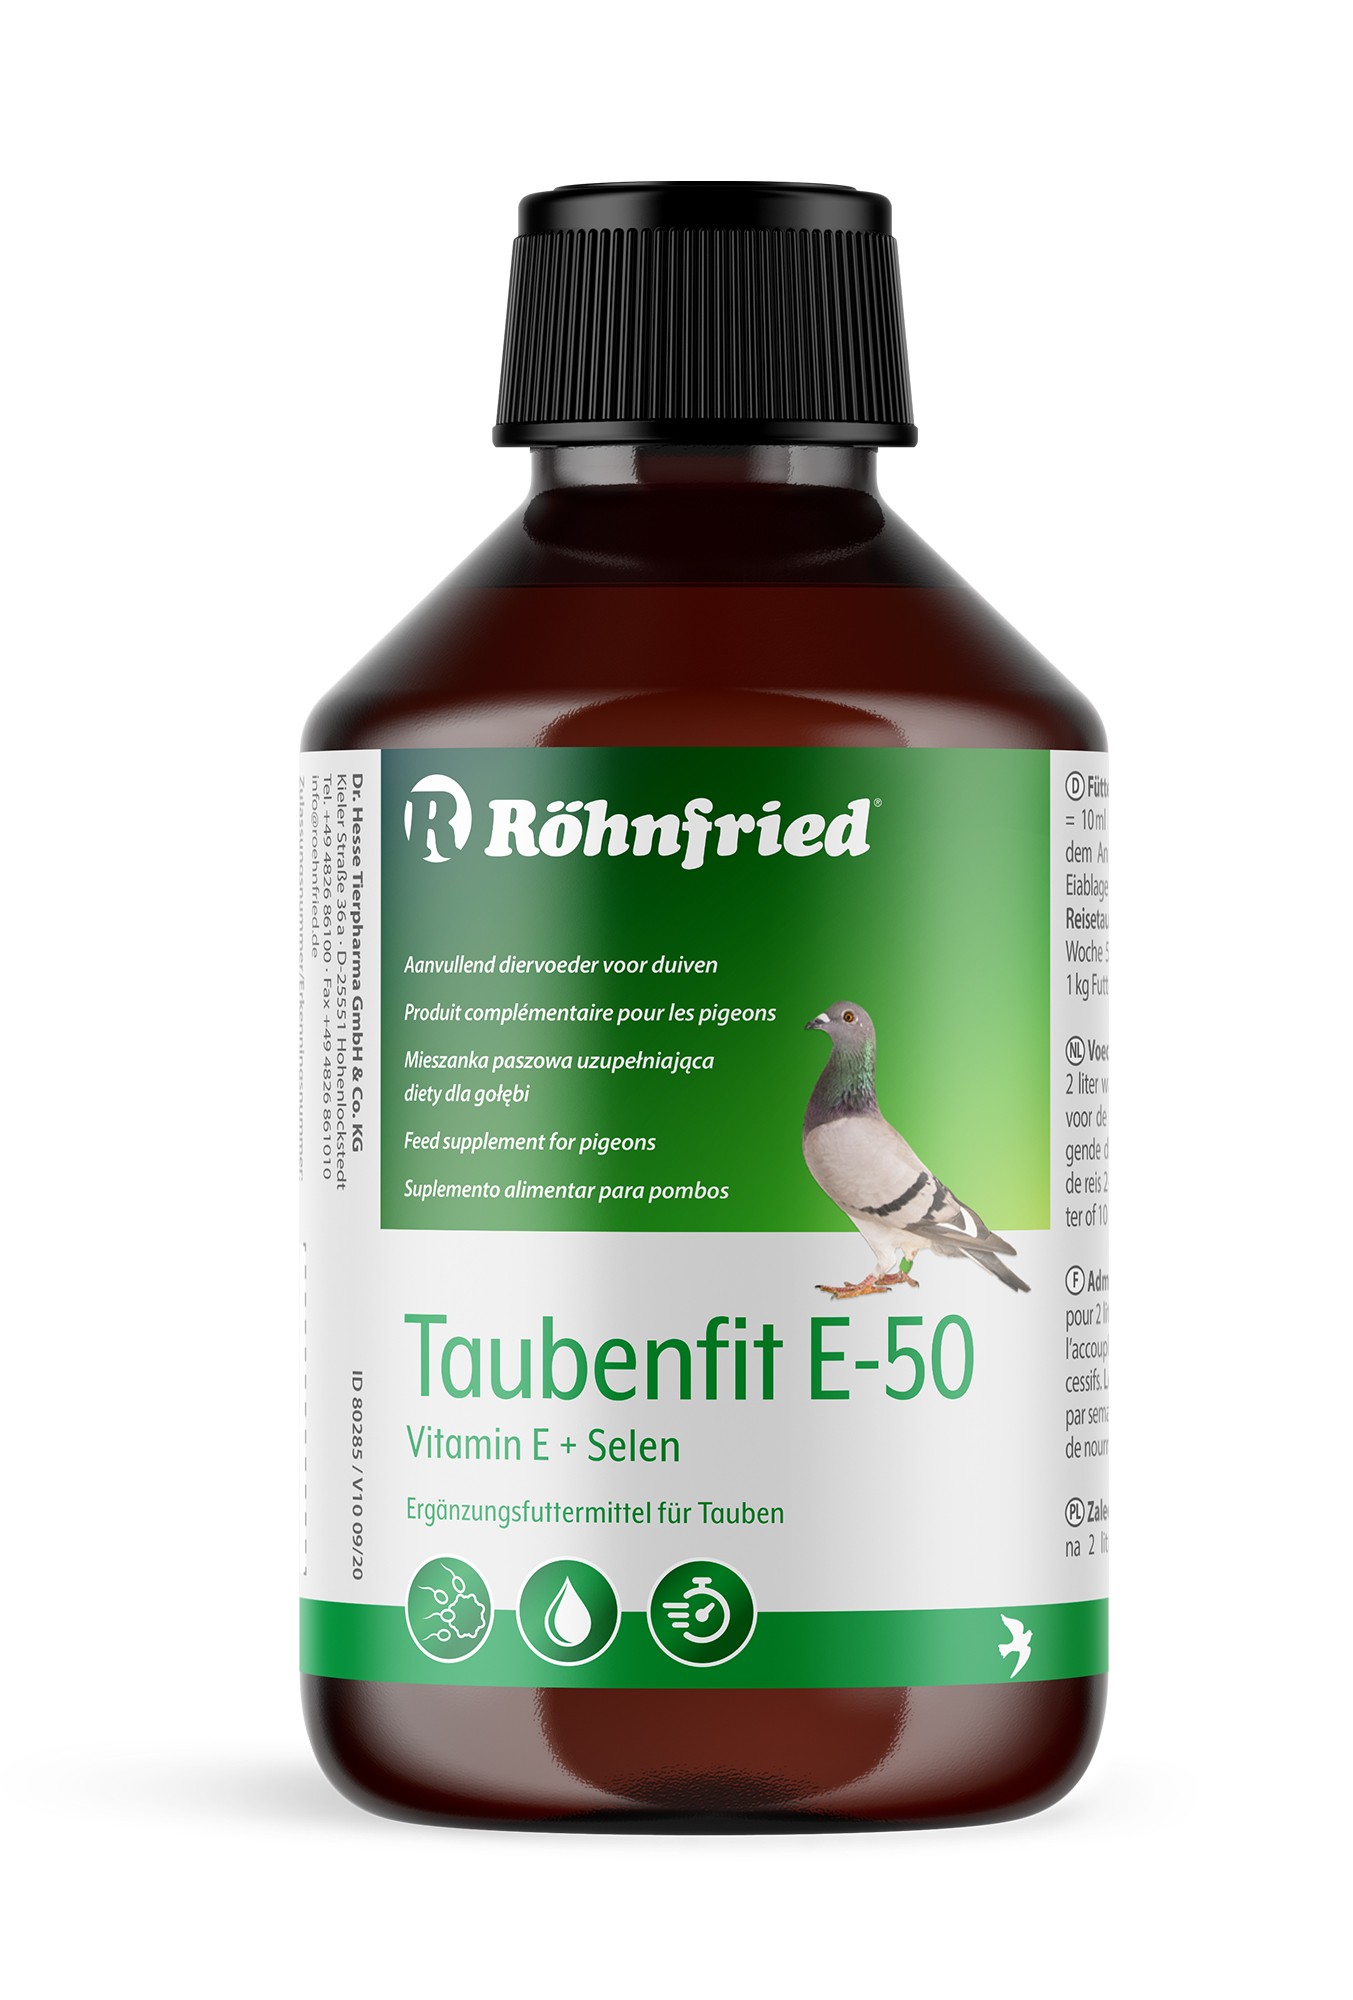 Röhnfried Taubenfit E-50 